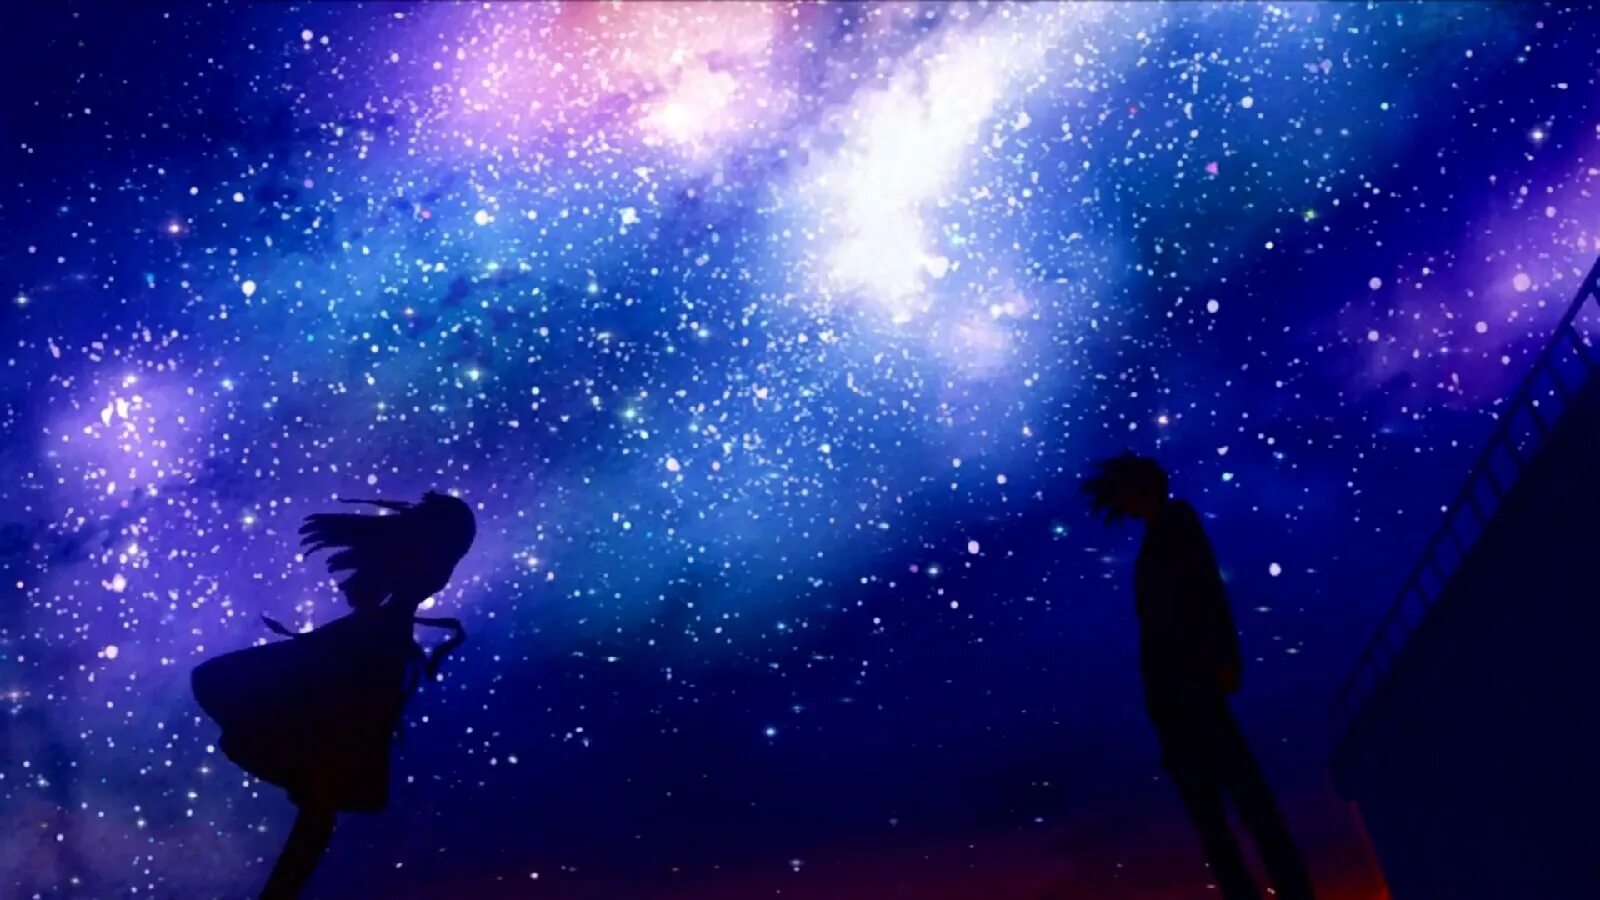 Среди звезд слушать. Звездное небо. Девушка и звездное небо. Ночное звездное небо. Человек на фоне звездного неба.